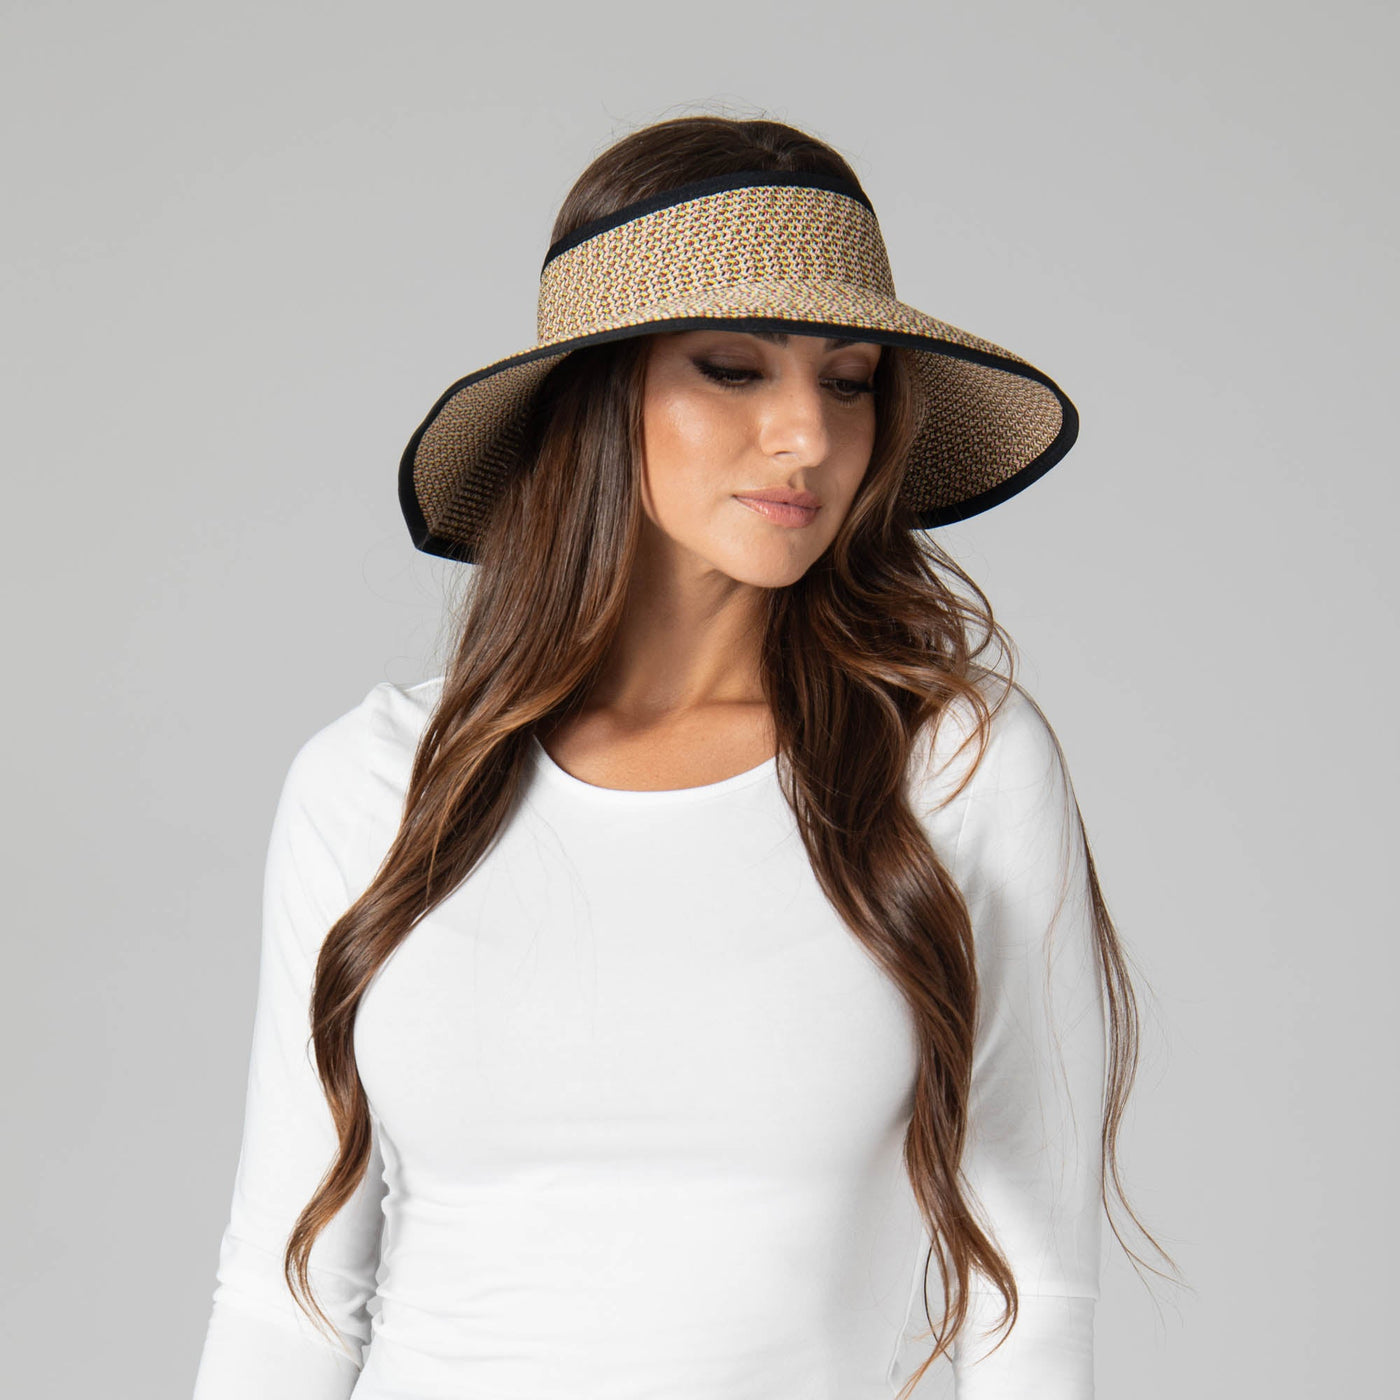 Buy JUANERJIE Women Roll Up Straw Sun Visor Hat, Wide Brim